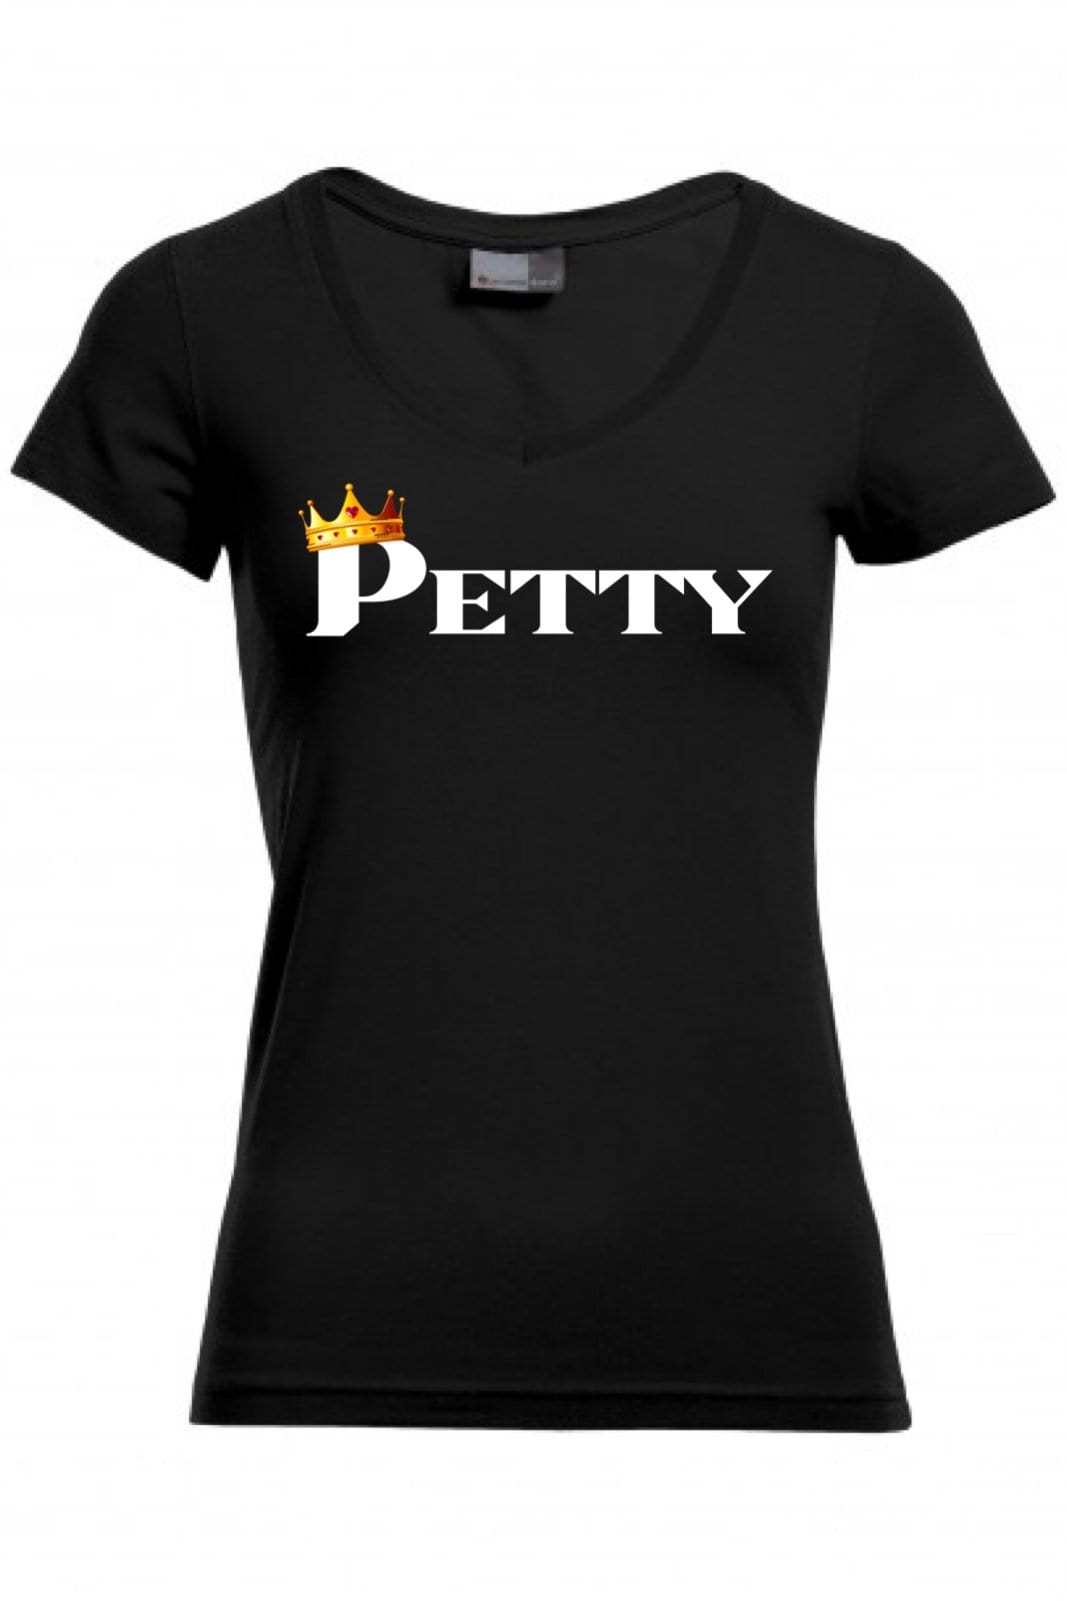 InsensitiviTees Shirts S / Black Petty Queen